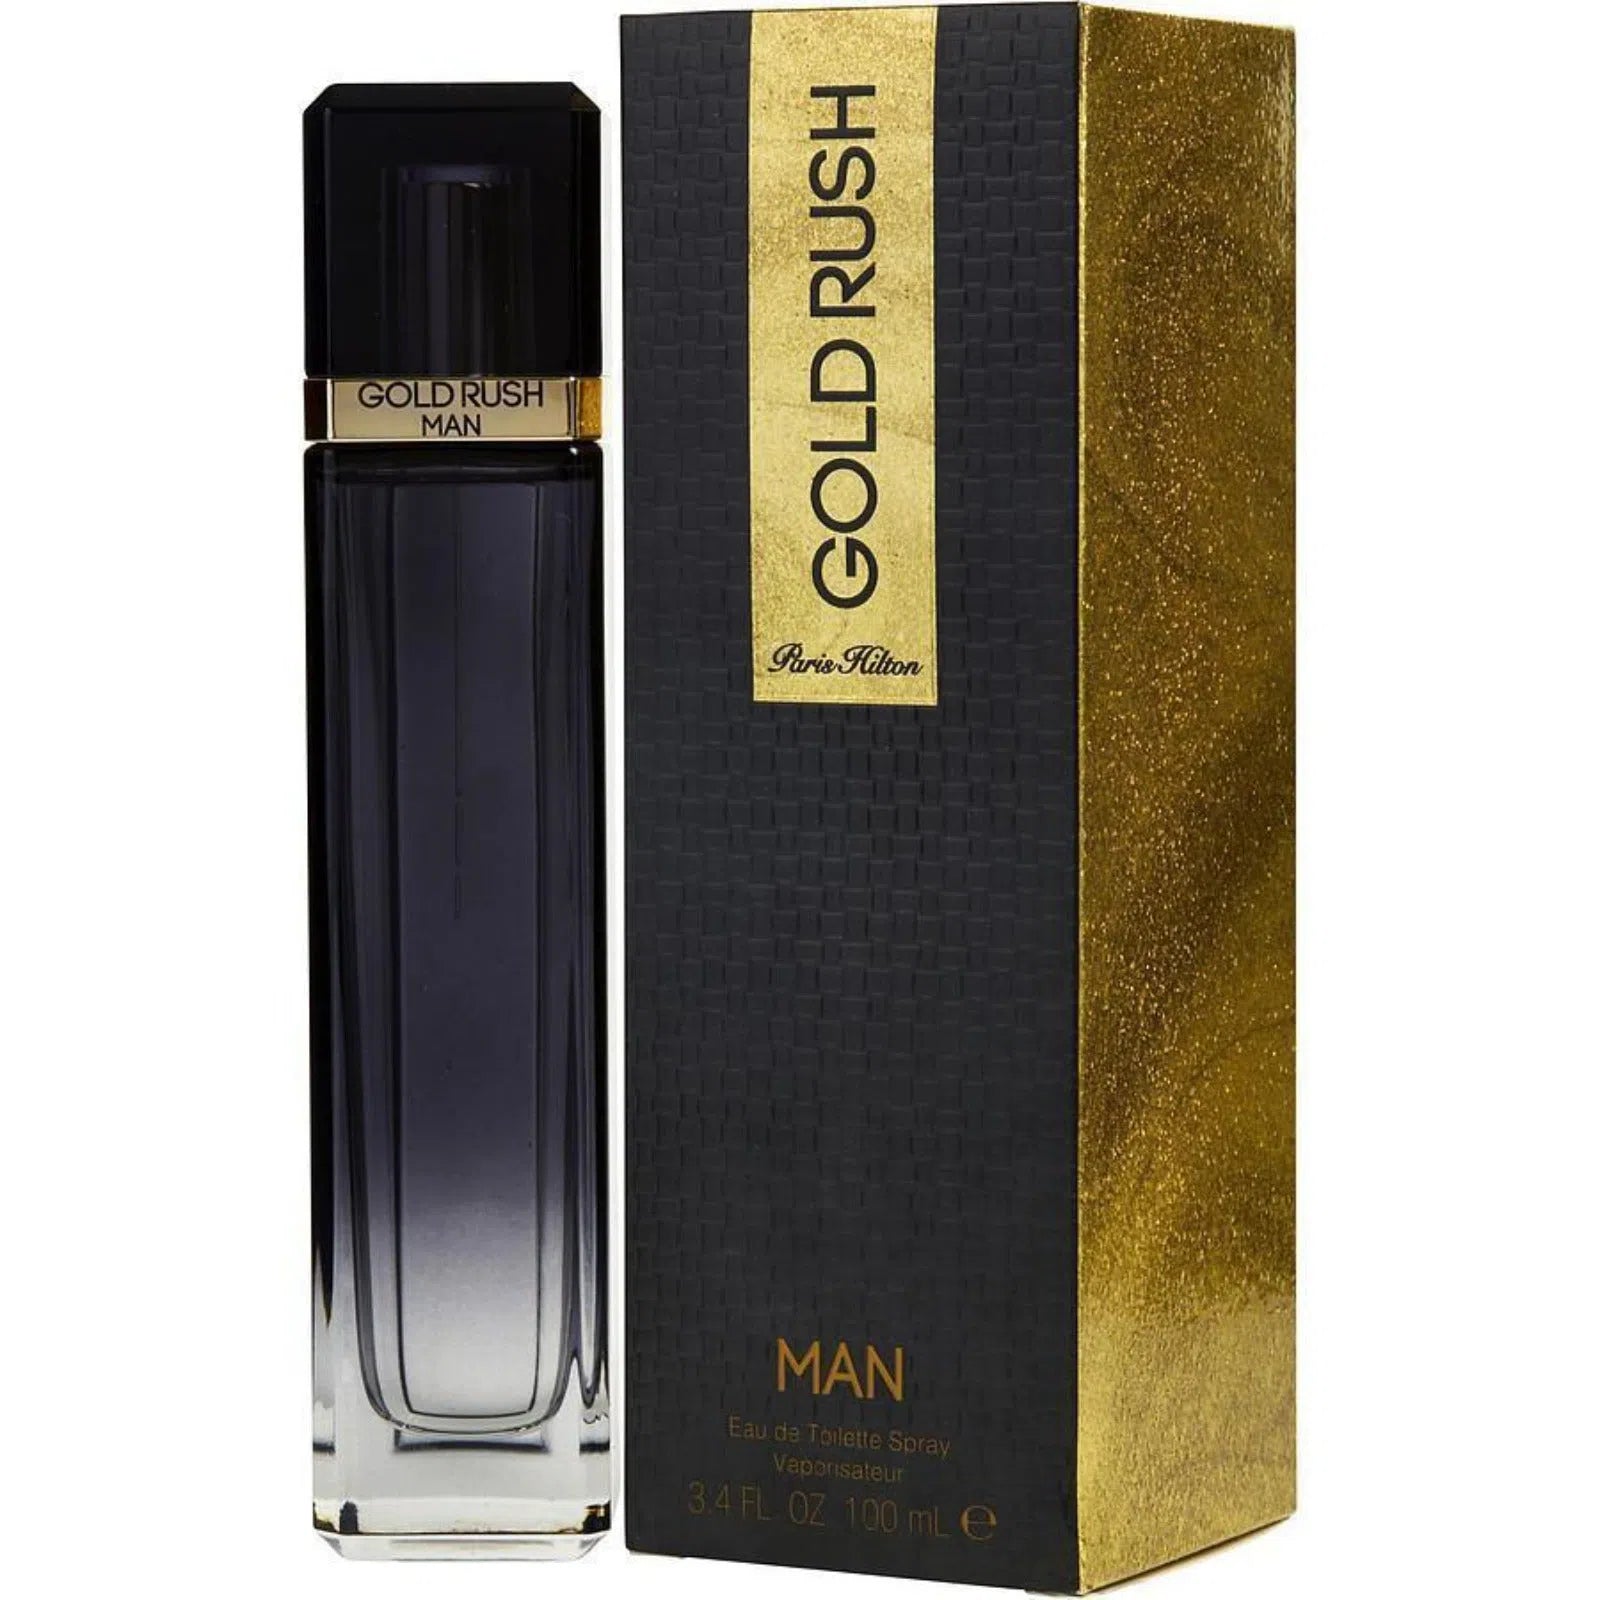 Perfume Paris Hilton Gold Rush EDT (M) / 100 ml - 608940566947- Prive Perfumes Honduras